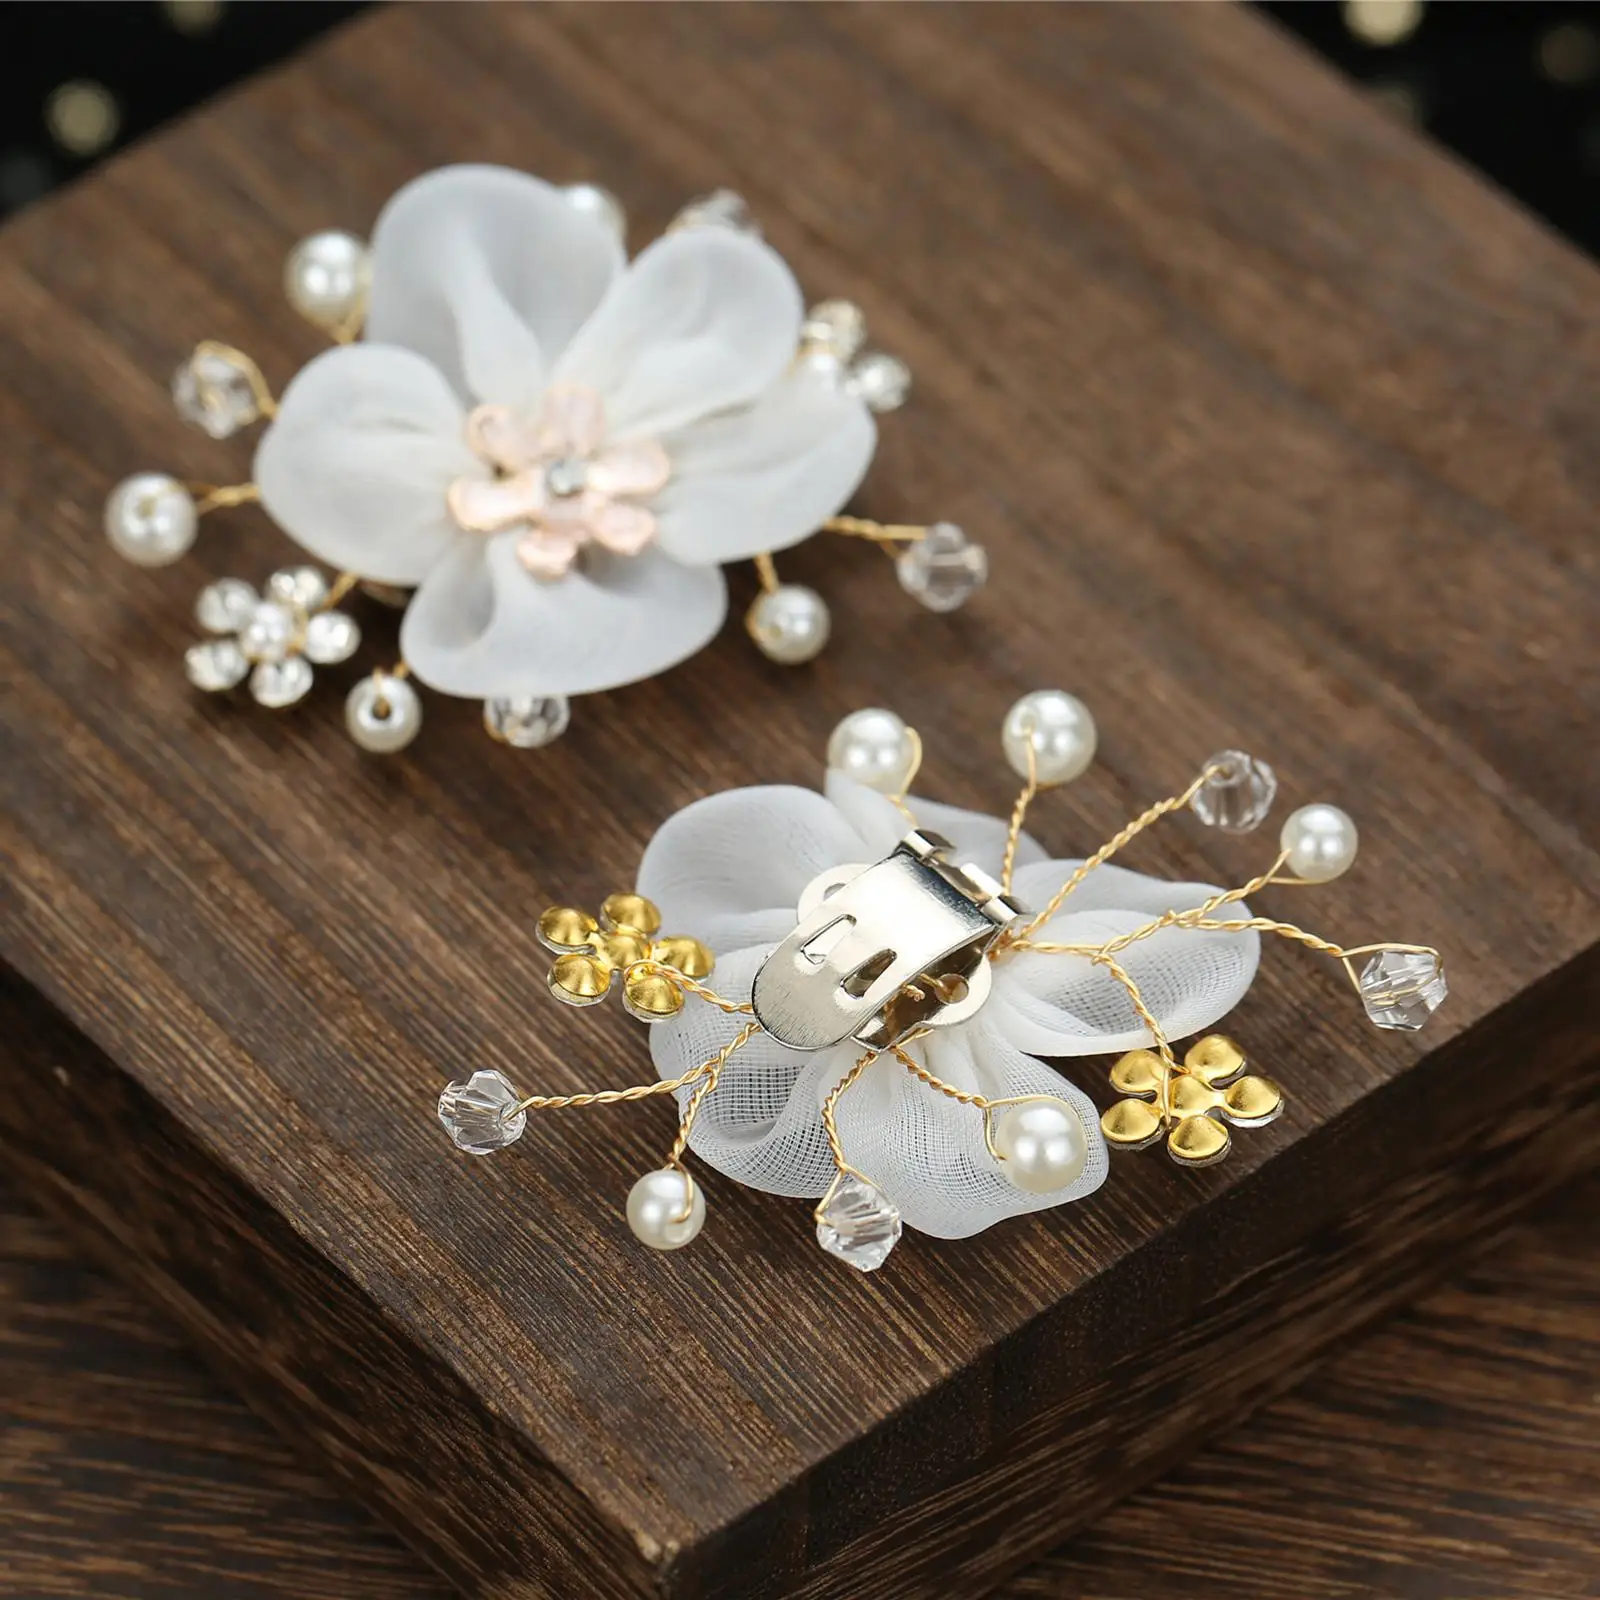 2x Flower Shoe Clips Bridal Removable Craft Jewelry Decor Decorative Shoe Clip Cloth Shoe Patch for Party Decor Gift DIY Banquet